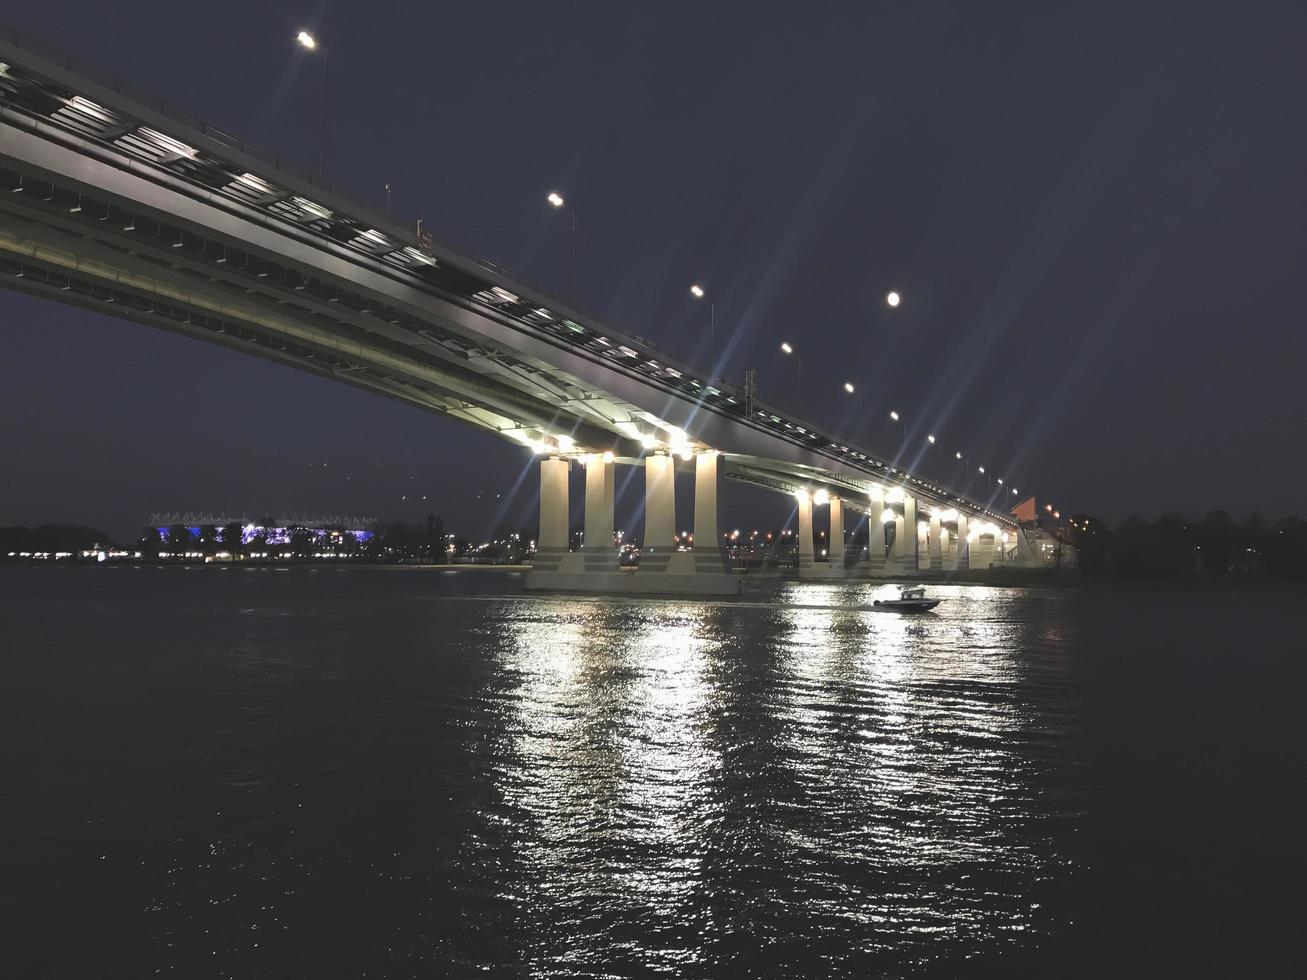 grote betonnen brug over de rivier de don in de nacht, in rostov am don city, rusland foto